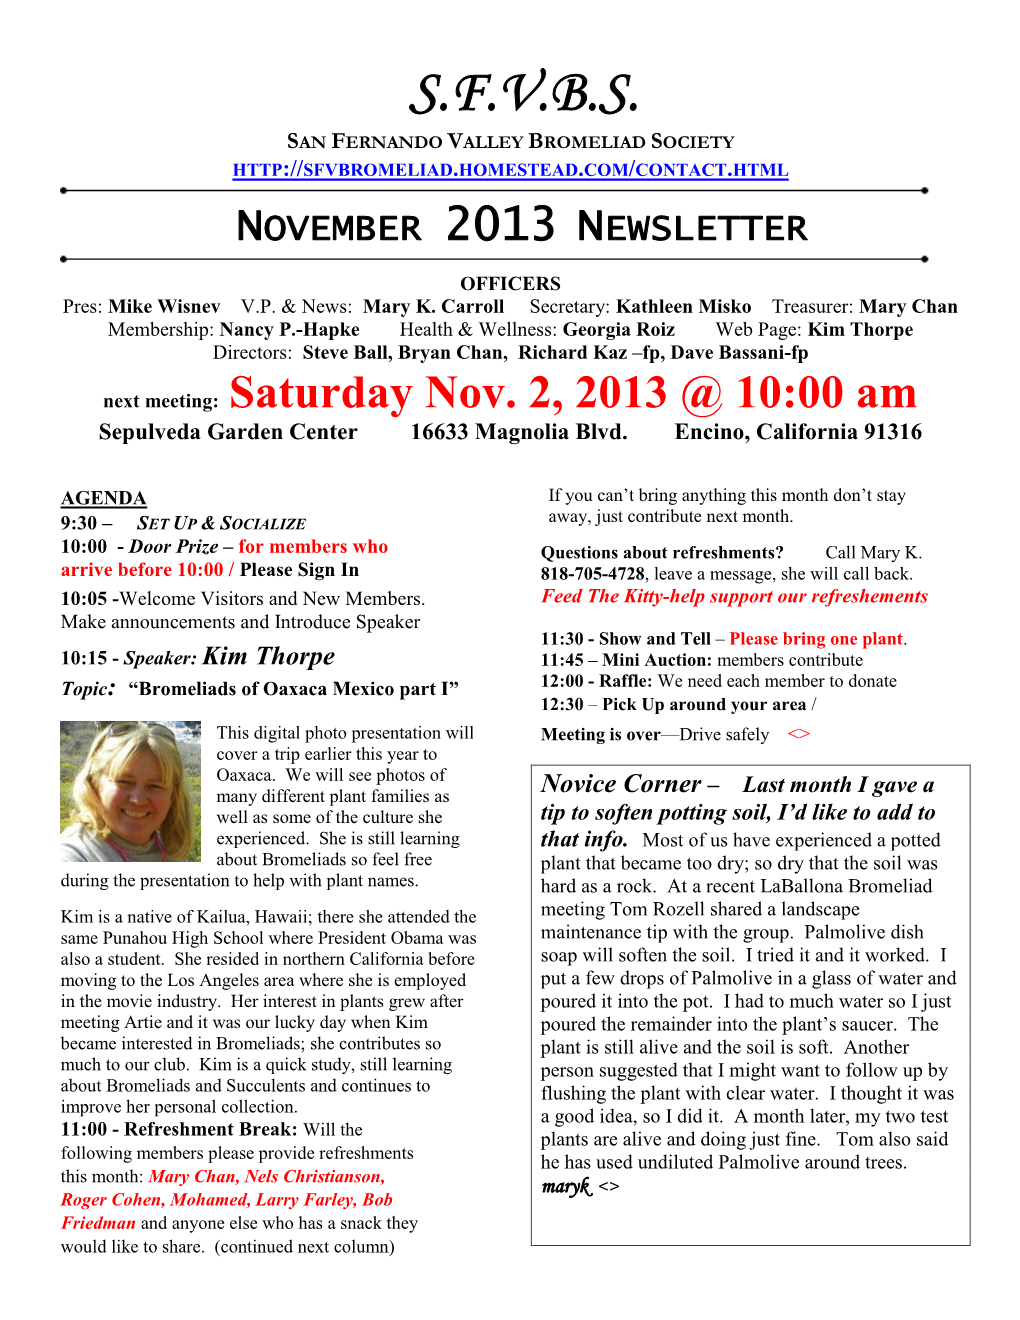 S.F.V.B.S. San Fernando Valley Bromeliad Society November 2013 Newsletter